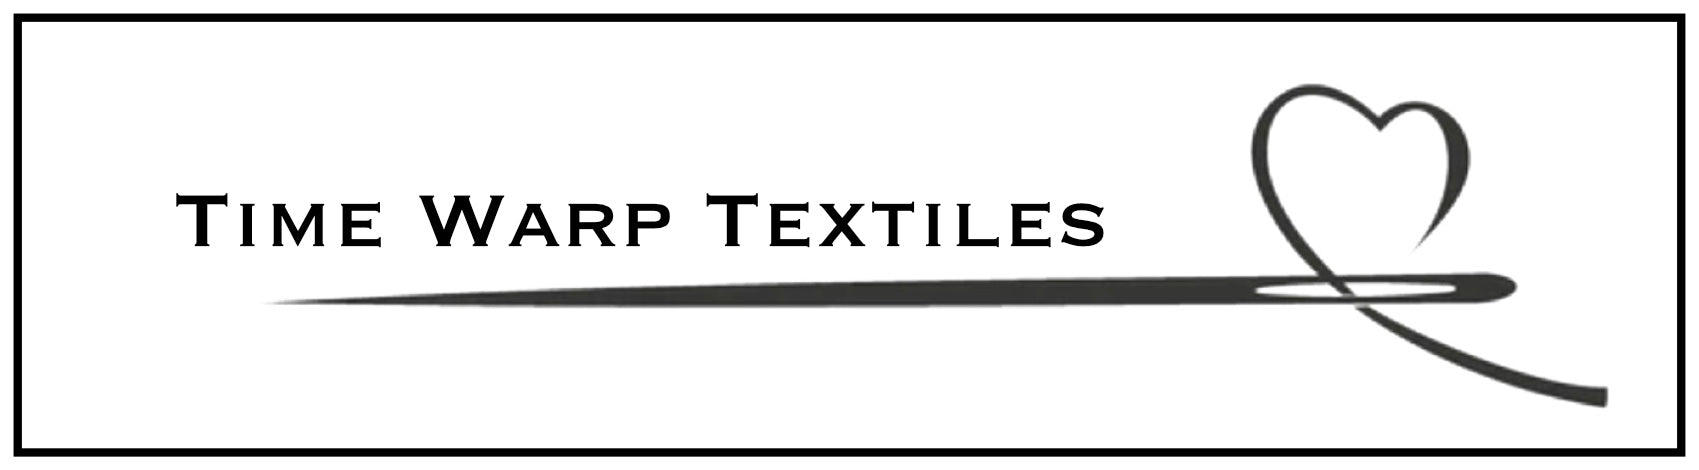 Time Warp Textiles